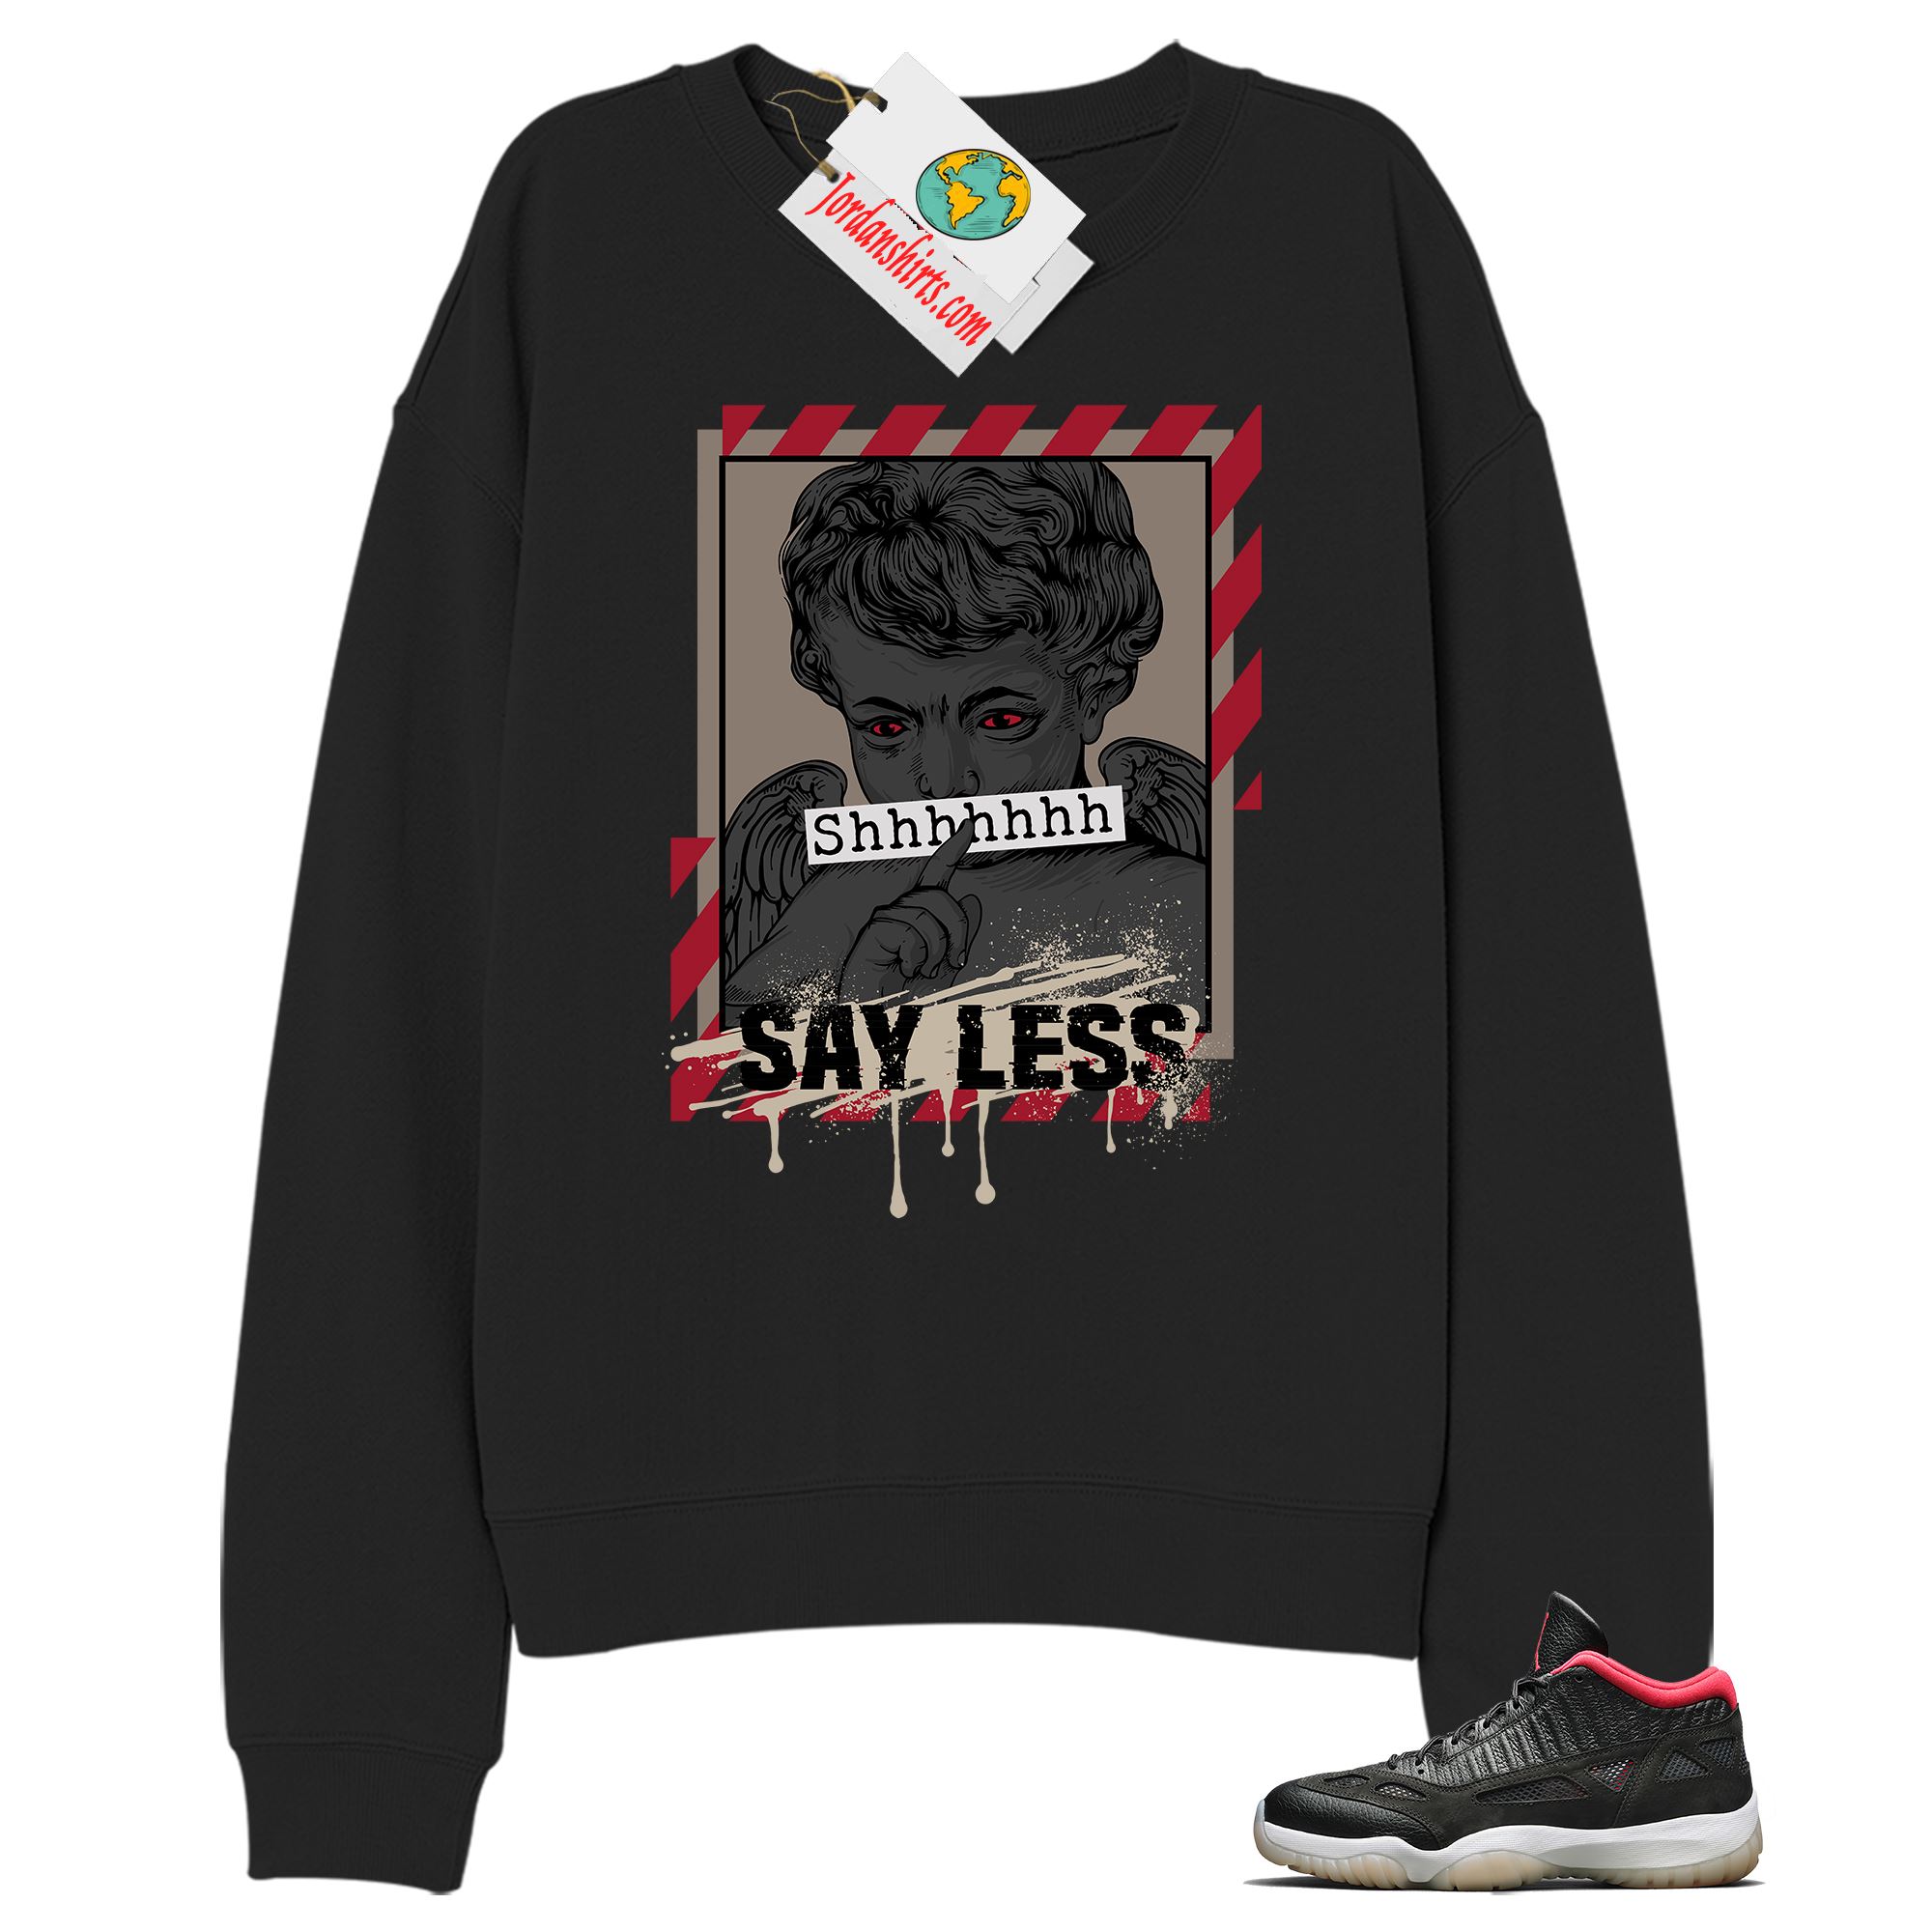 Jordan 11 Sweatshirt, Say Less Angel Black Sweatshirt Air Jordan 11 Bred 11s Full Size Up To 5xl